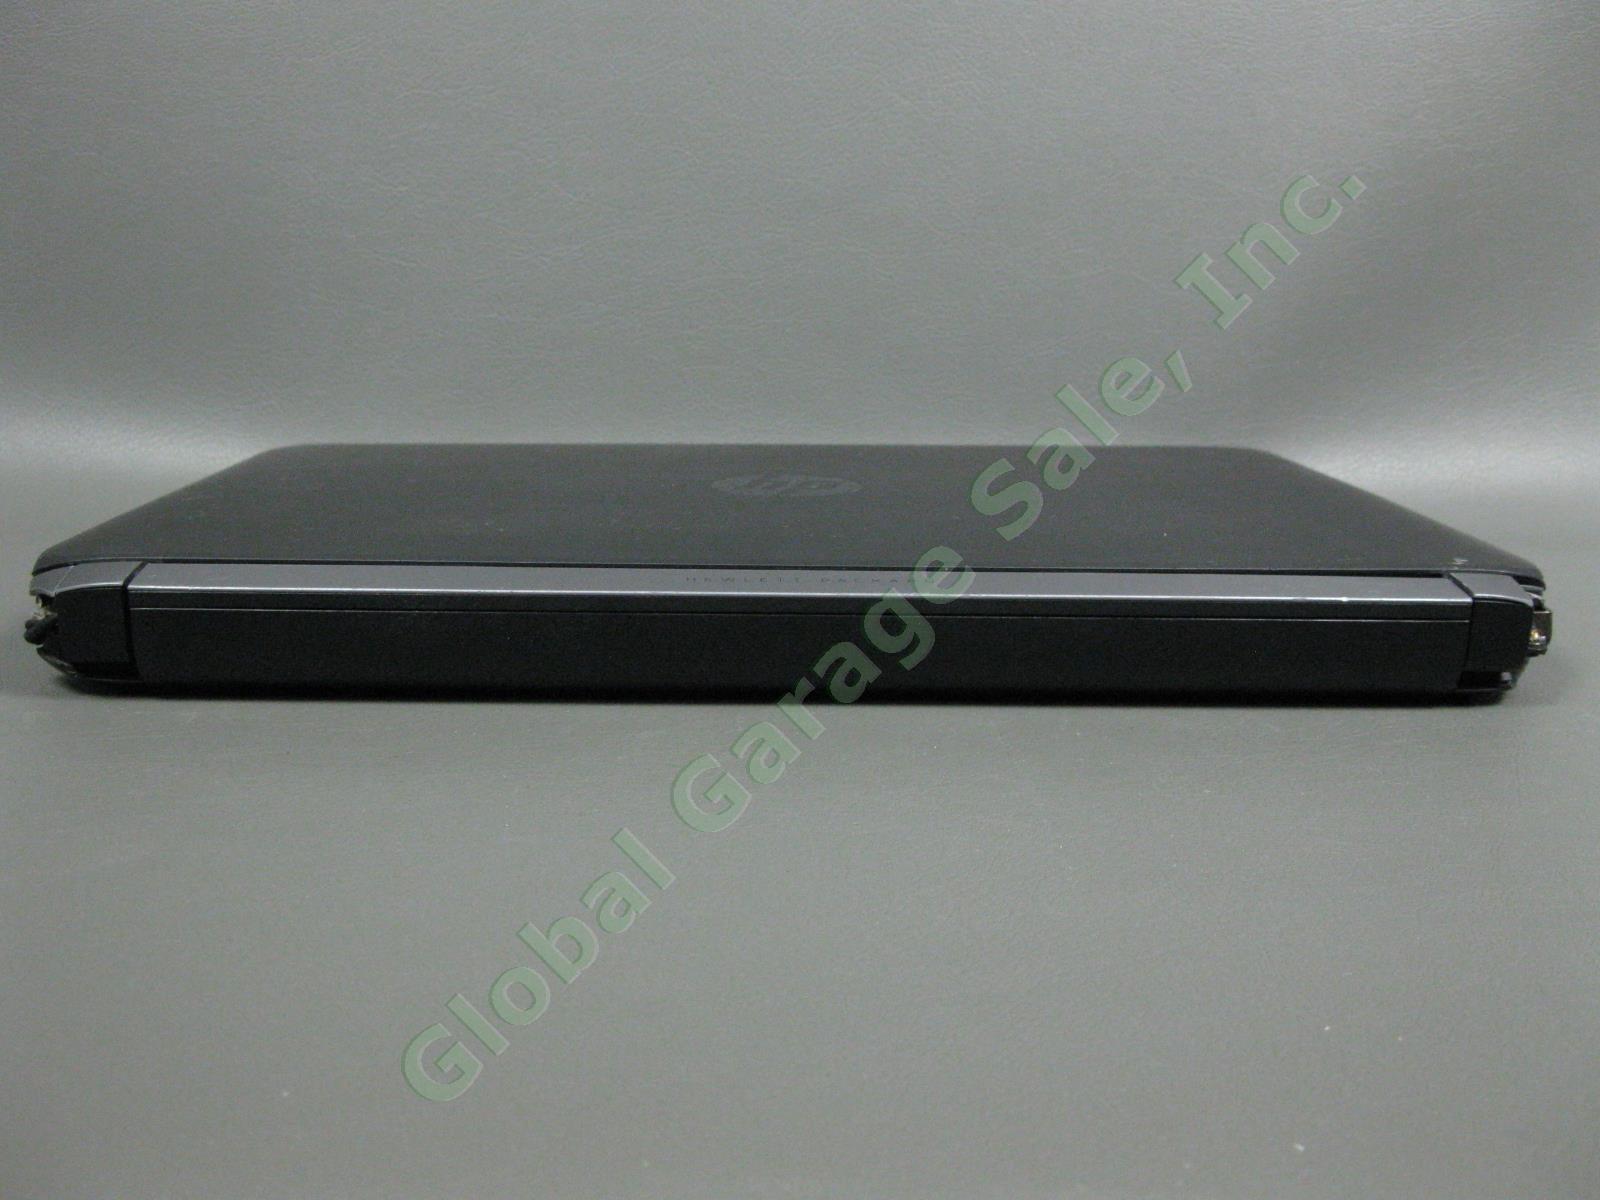 HP ProBook Black Laptop 440 G2 i5-5200U 2.20GHz 4GB RAM 460GB HD Windows 10 Pro 6